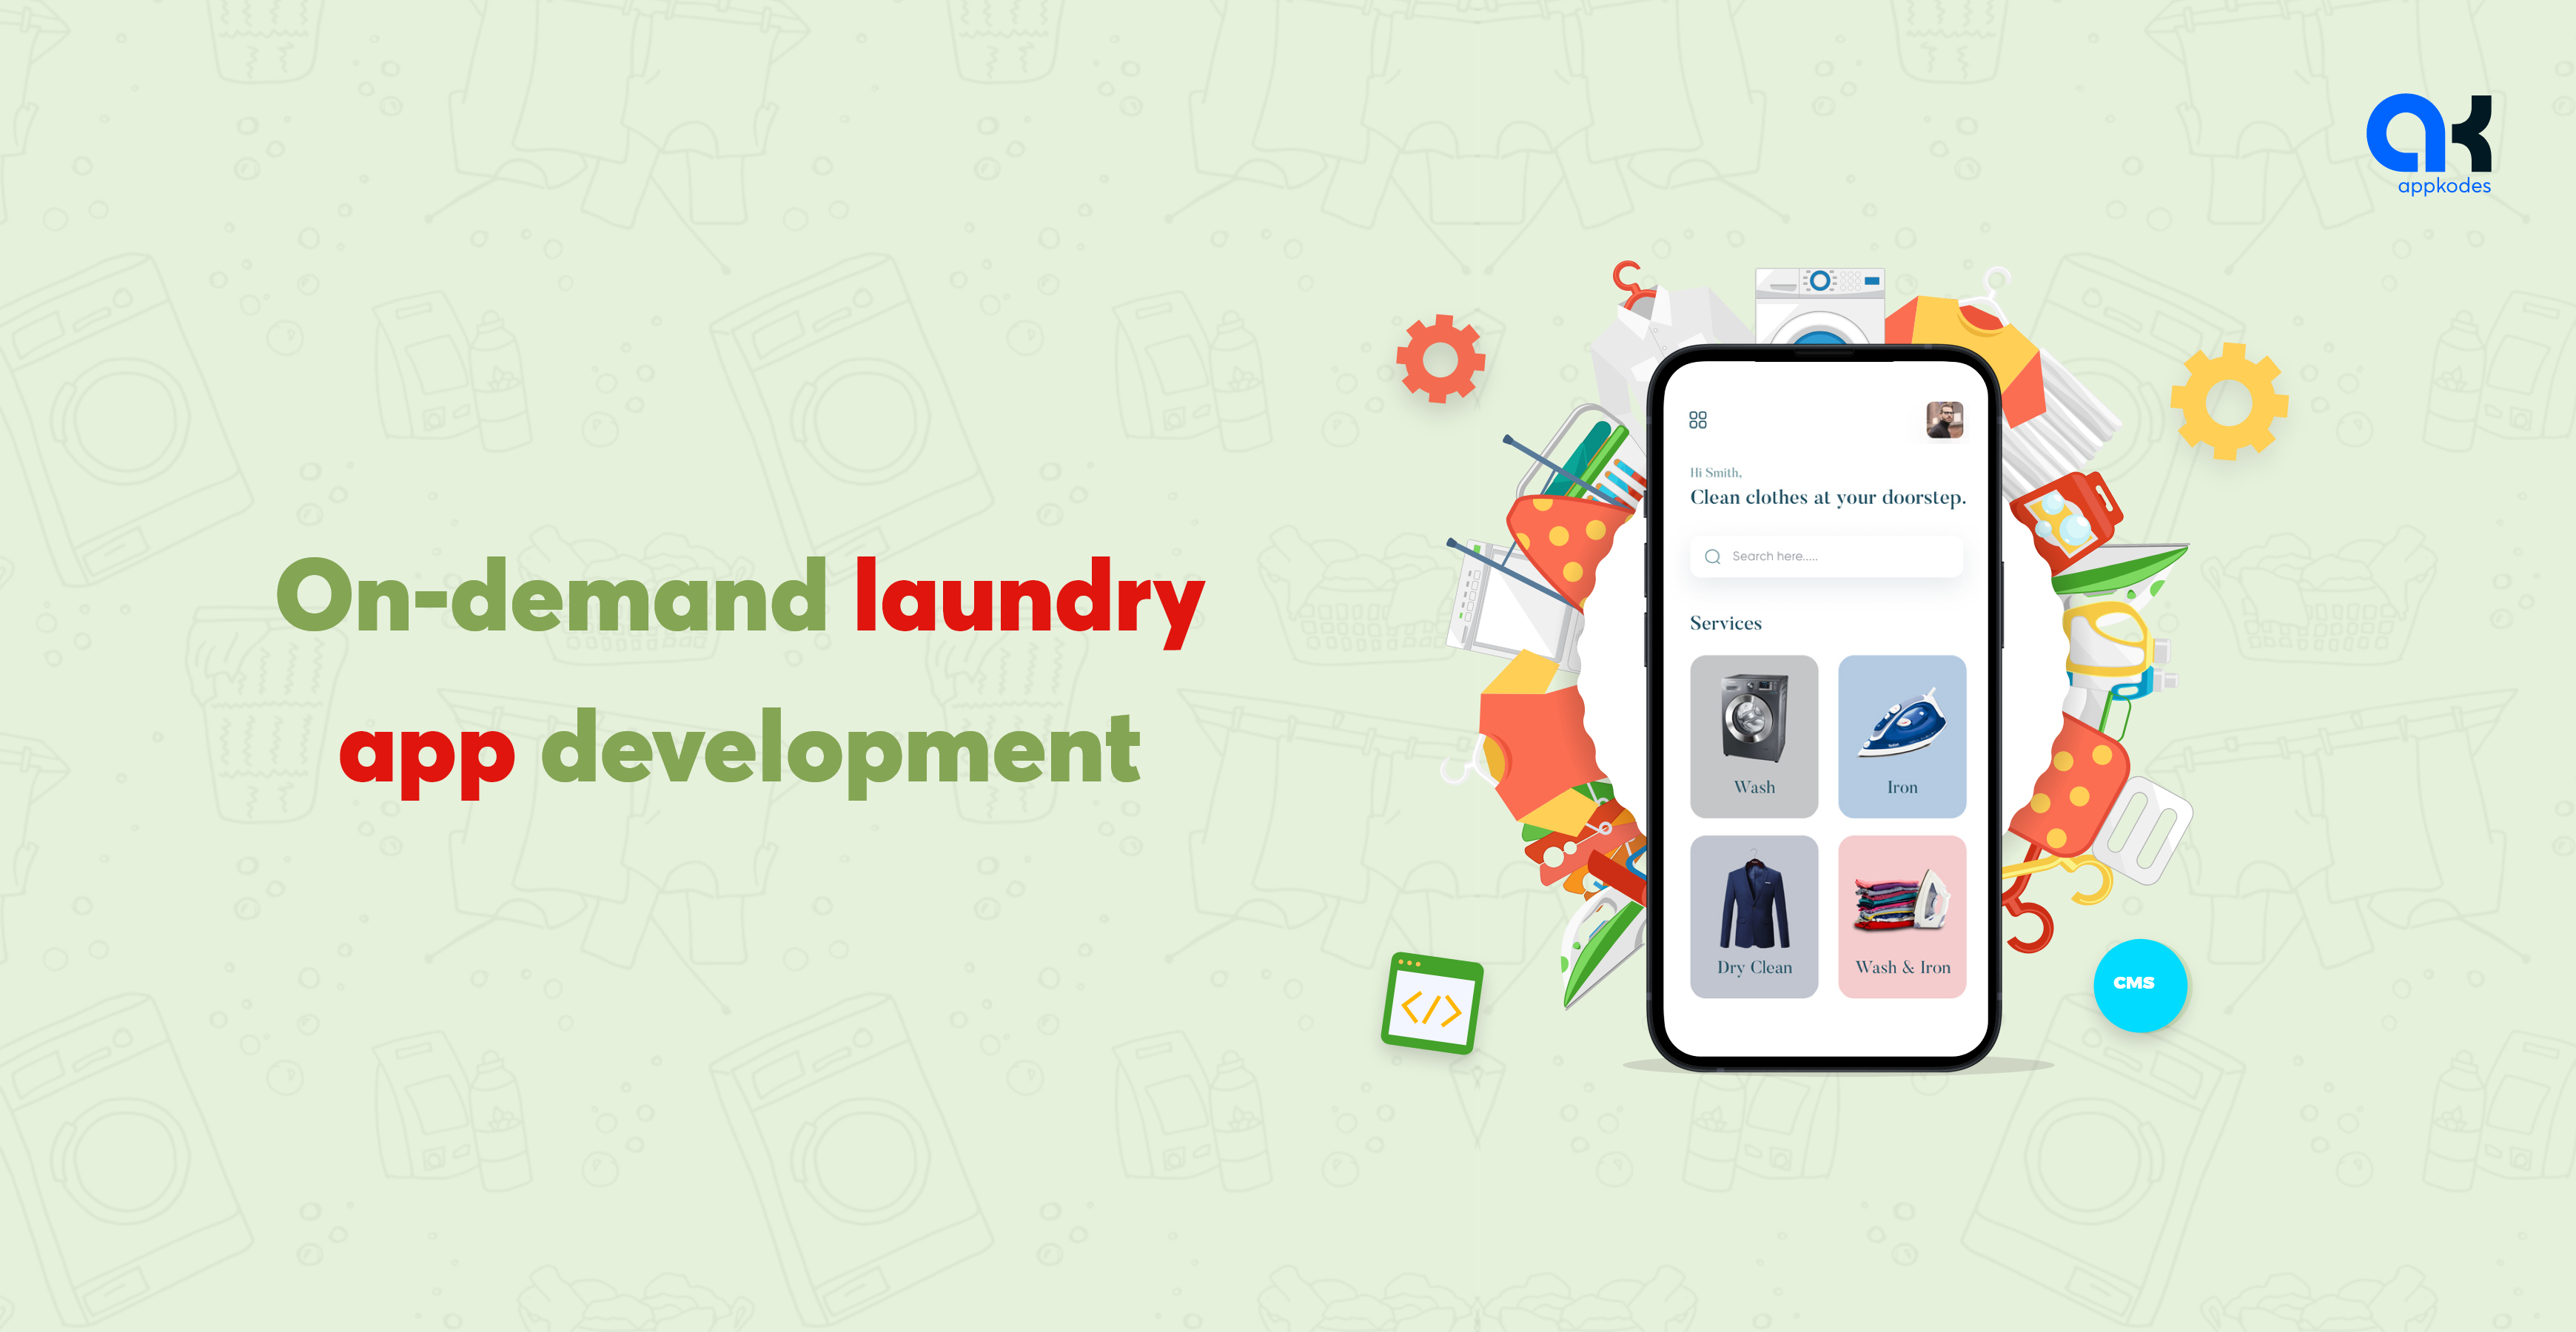 On-demand laundry app development